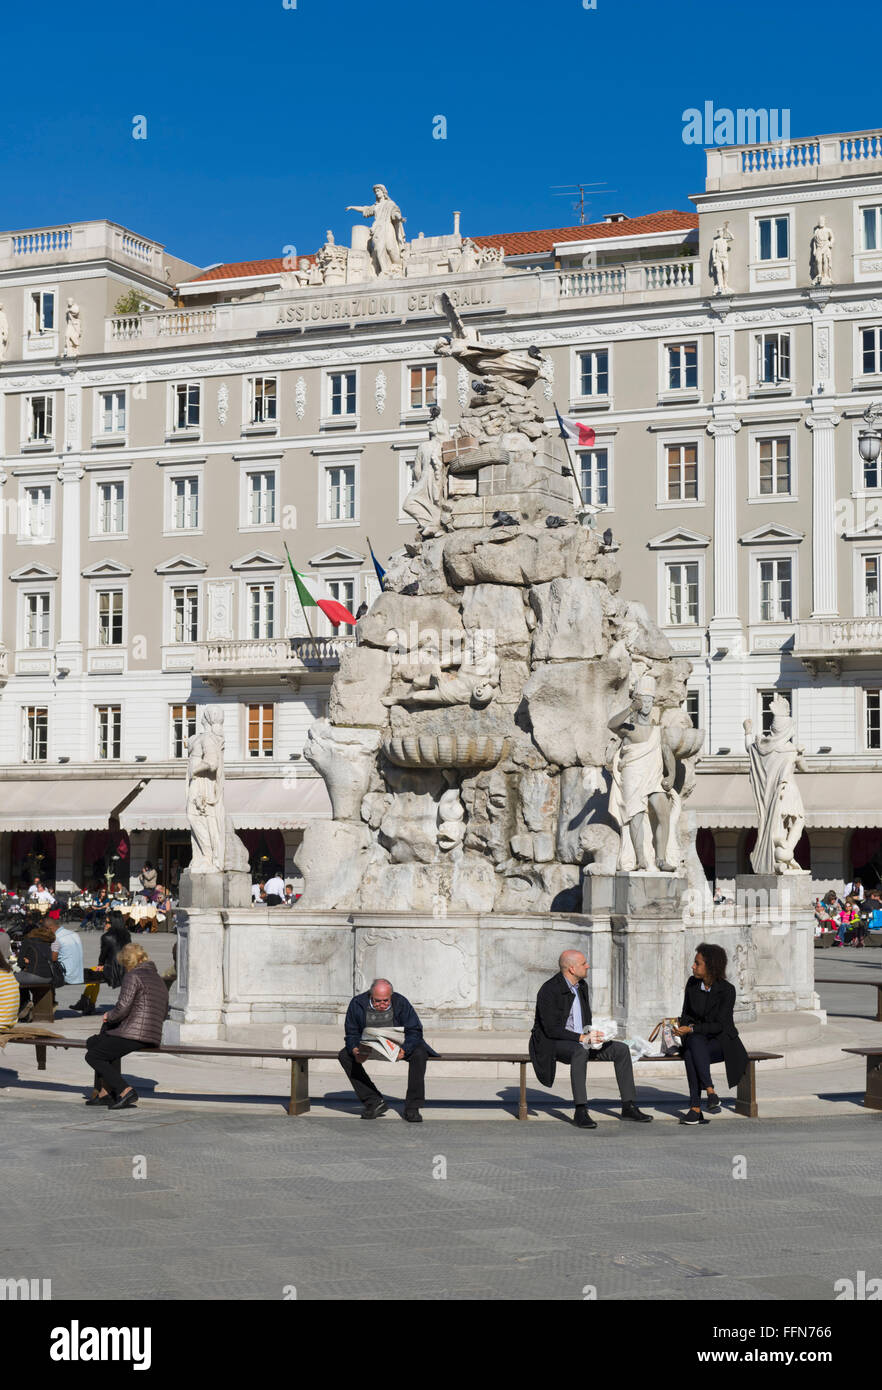 Tourists at the fountain in Piazza Unita d'Italia square, Trieste, Italy, Europe Stock Photo